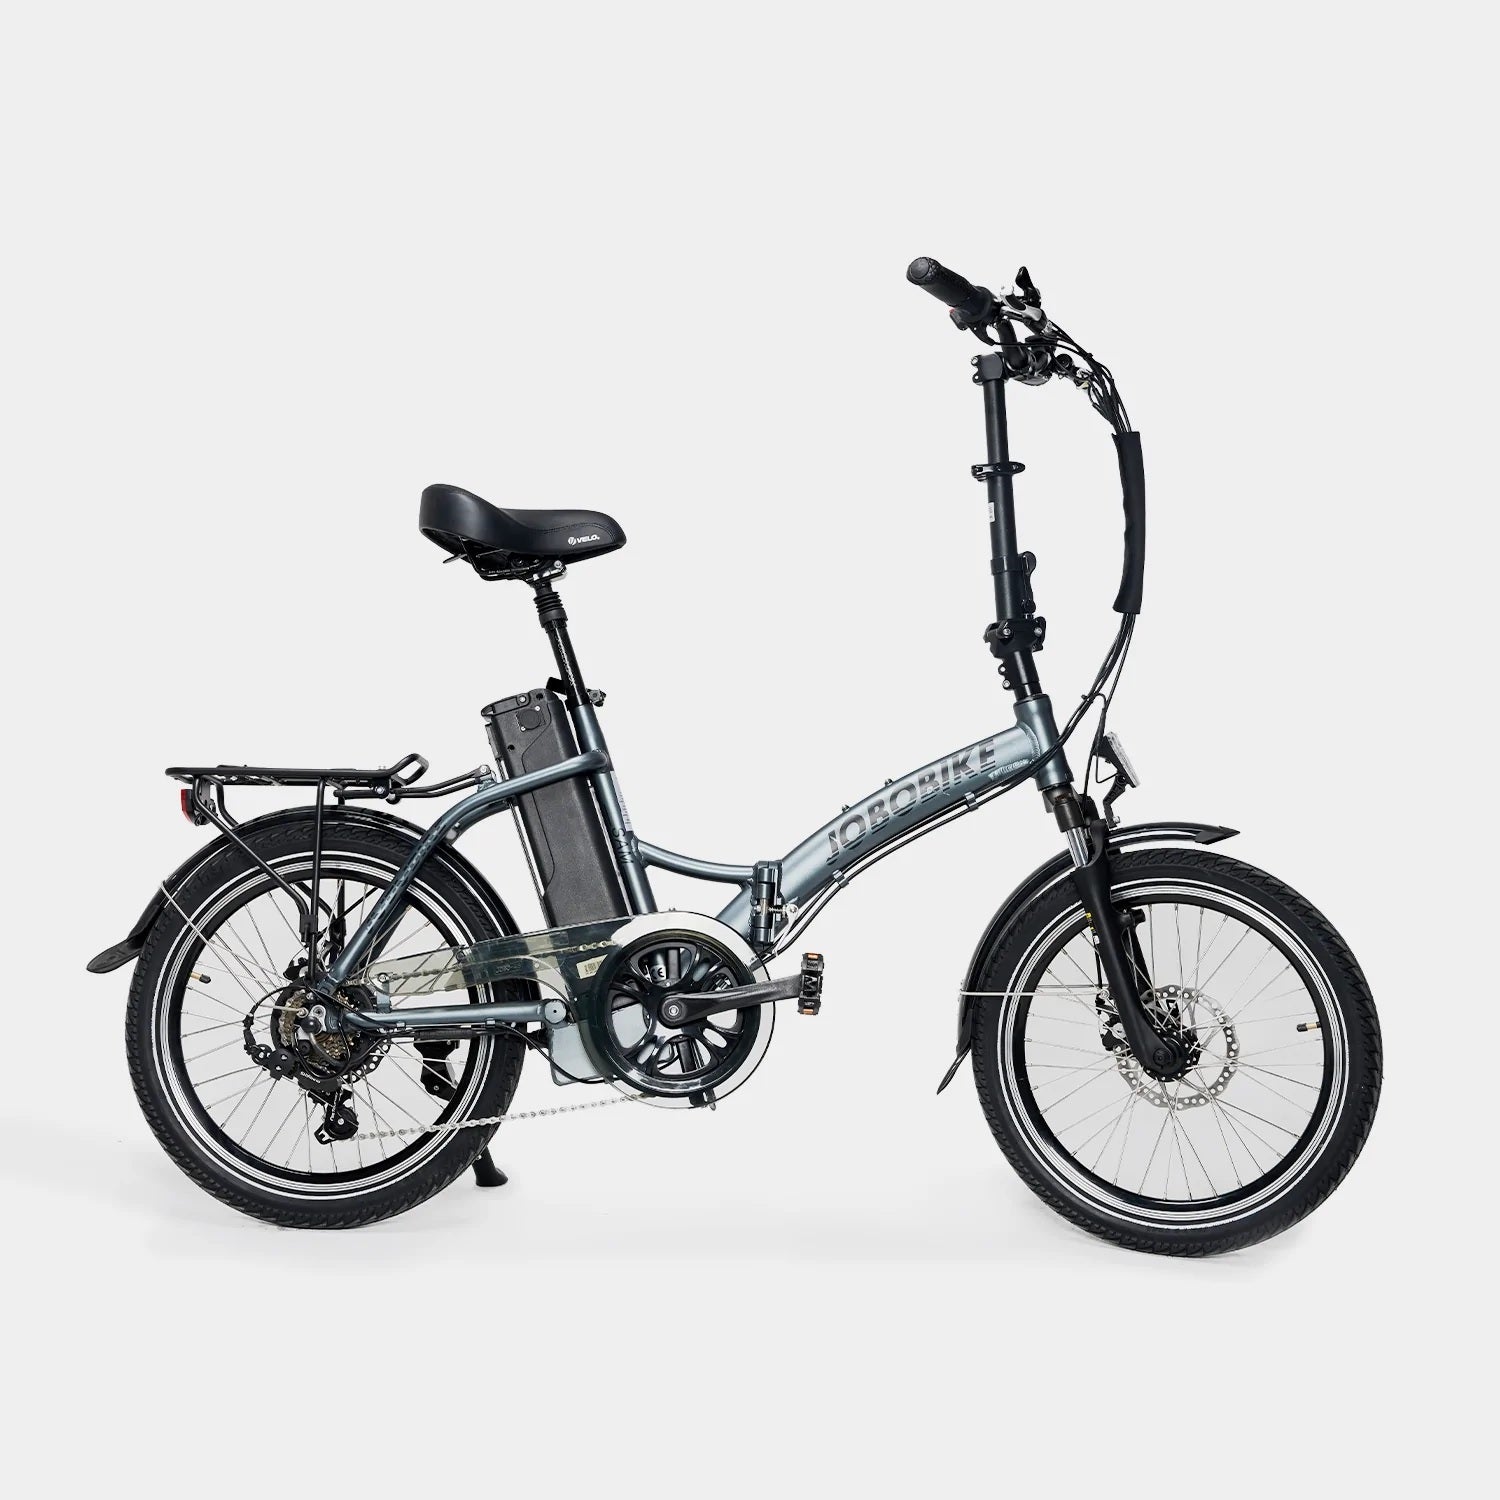 JOBOBIKE Sam e-bike inch freewheel 20 11-28T 7 – Shimano speed